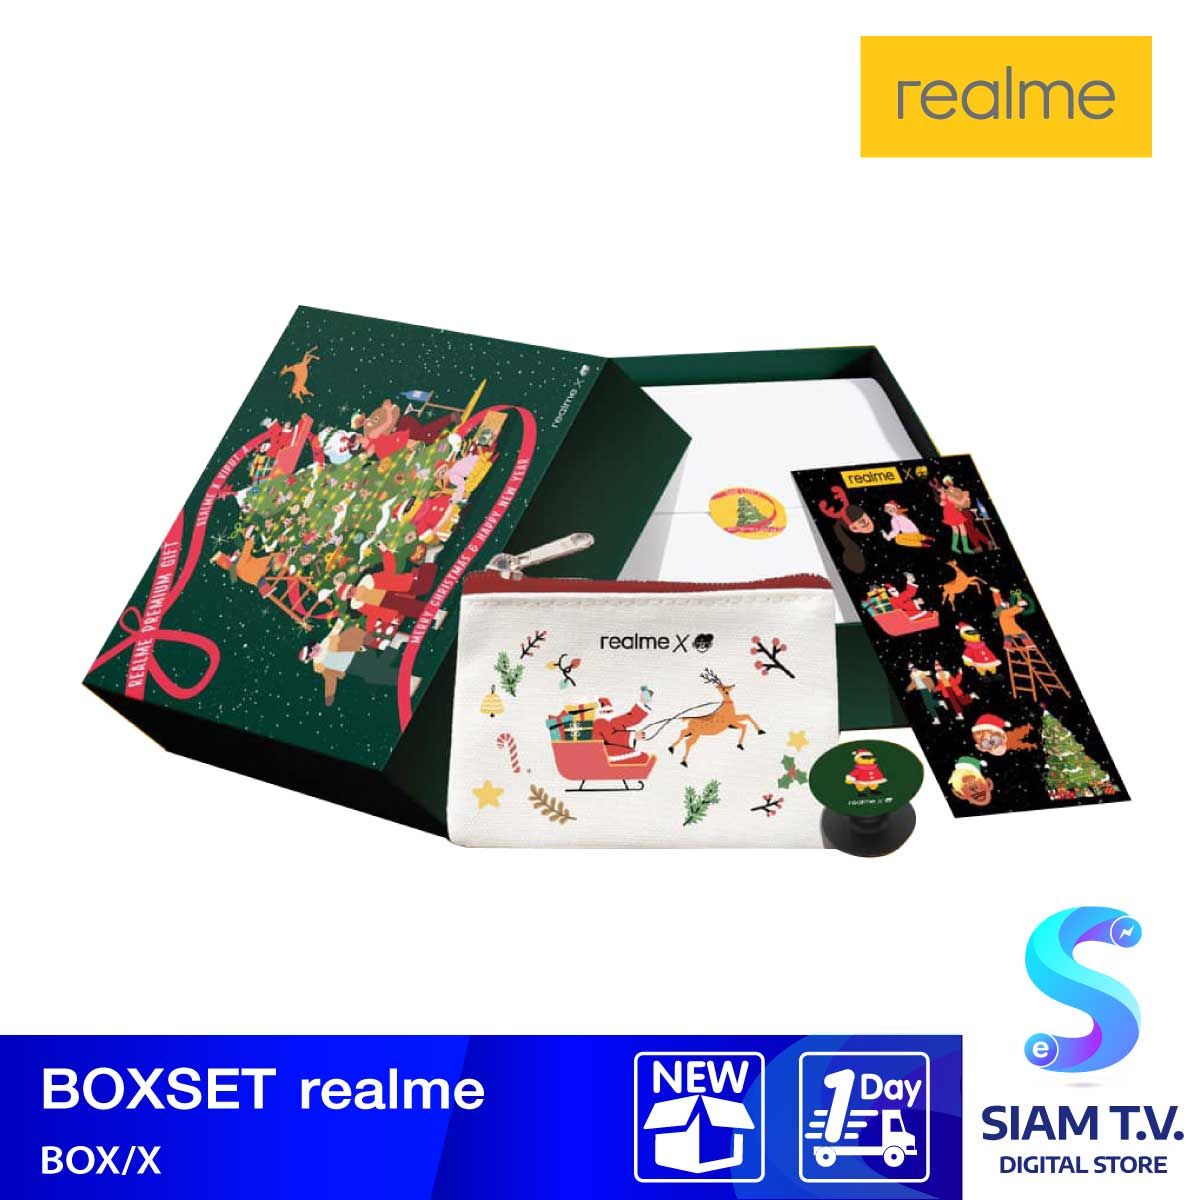 BOXSET REALME (กระเป๋า+สติ๊กเกอร์+ที่ติดหลังมือถือ)